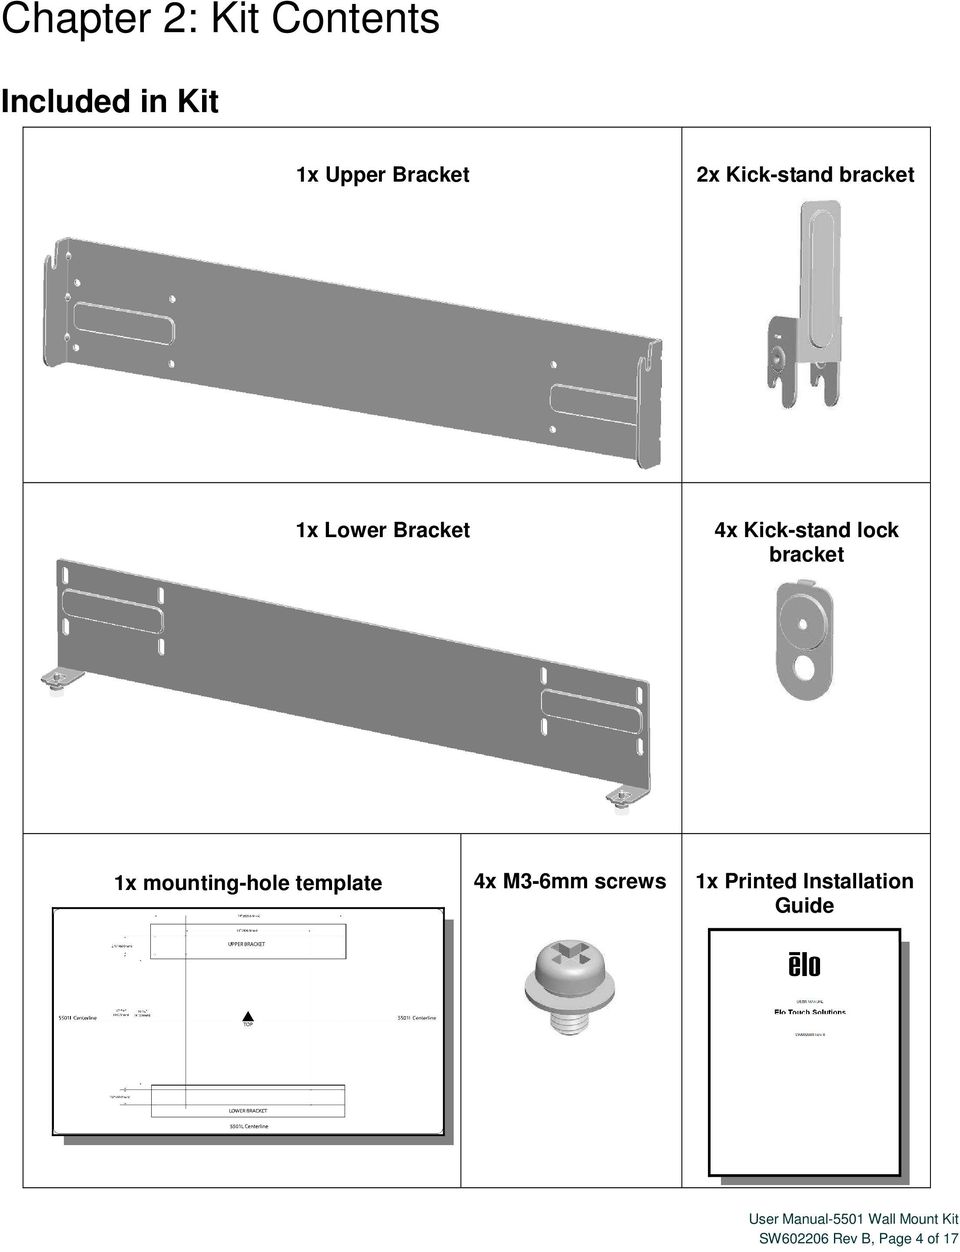 Kick-stand lock bracket 1x mounting-hole template 4x